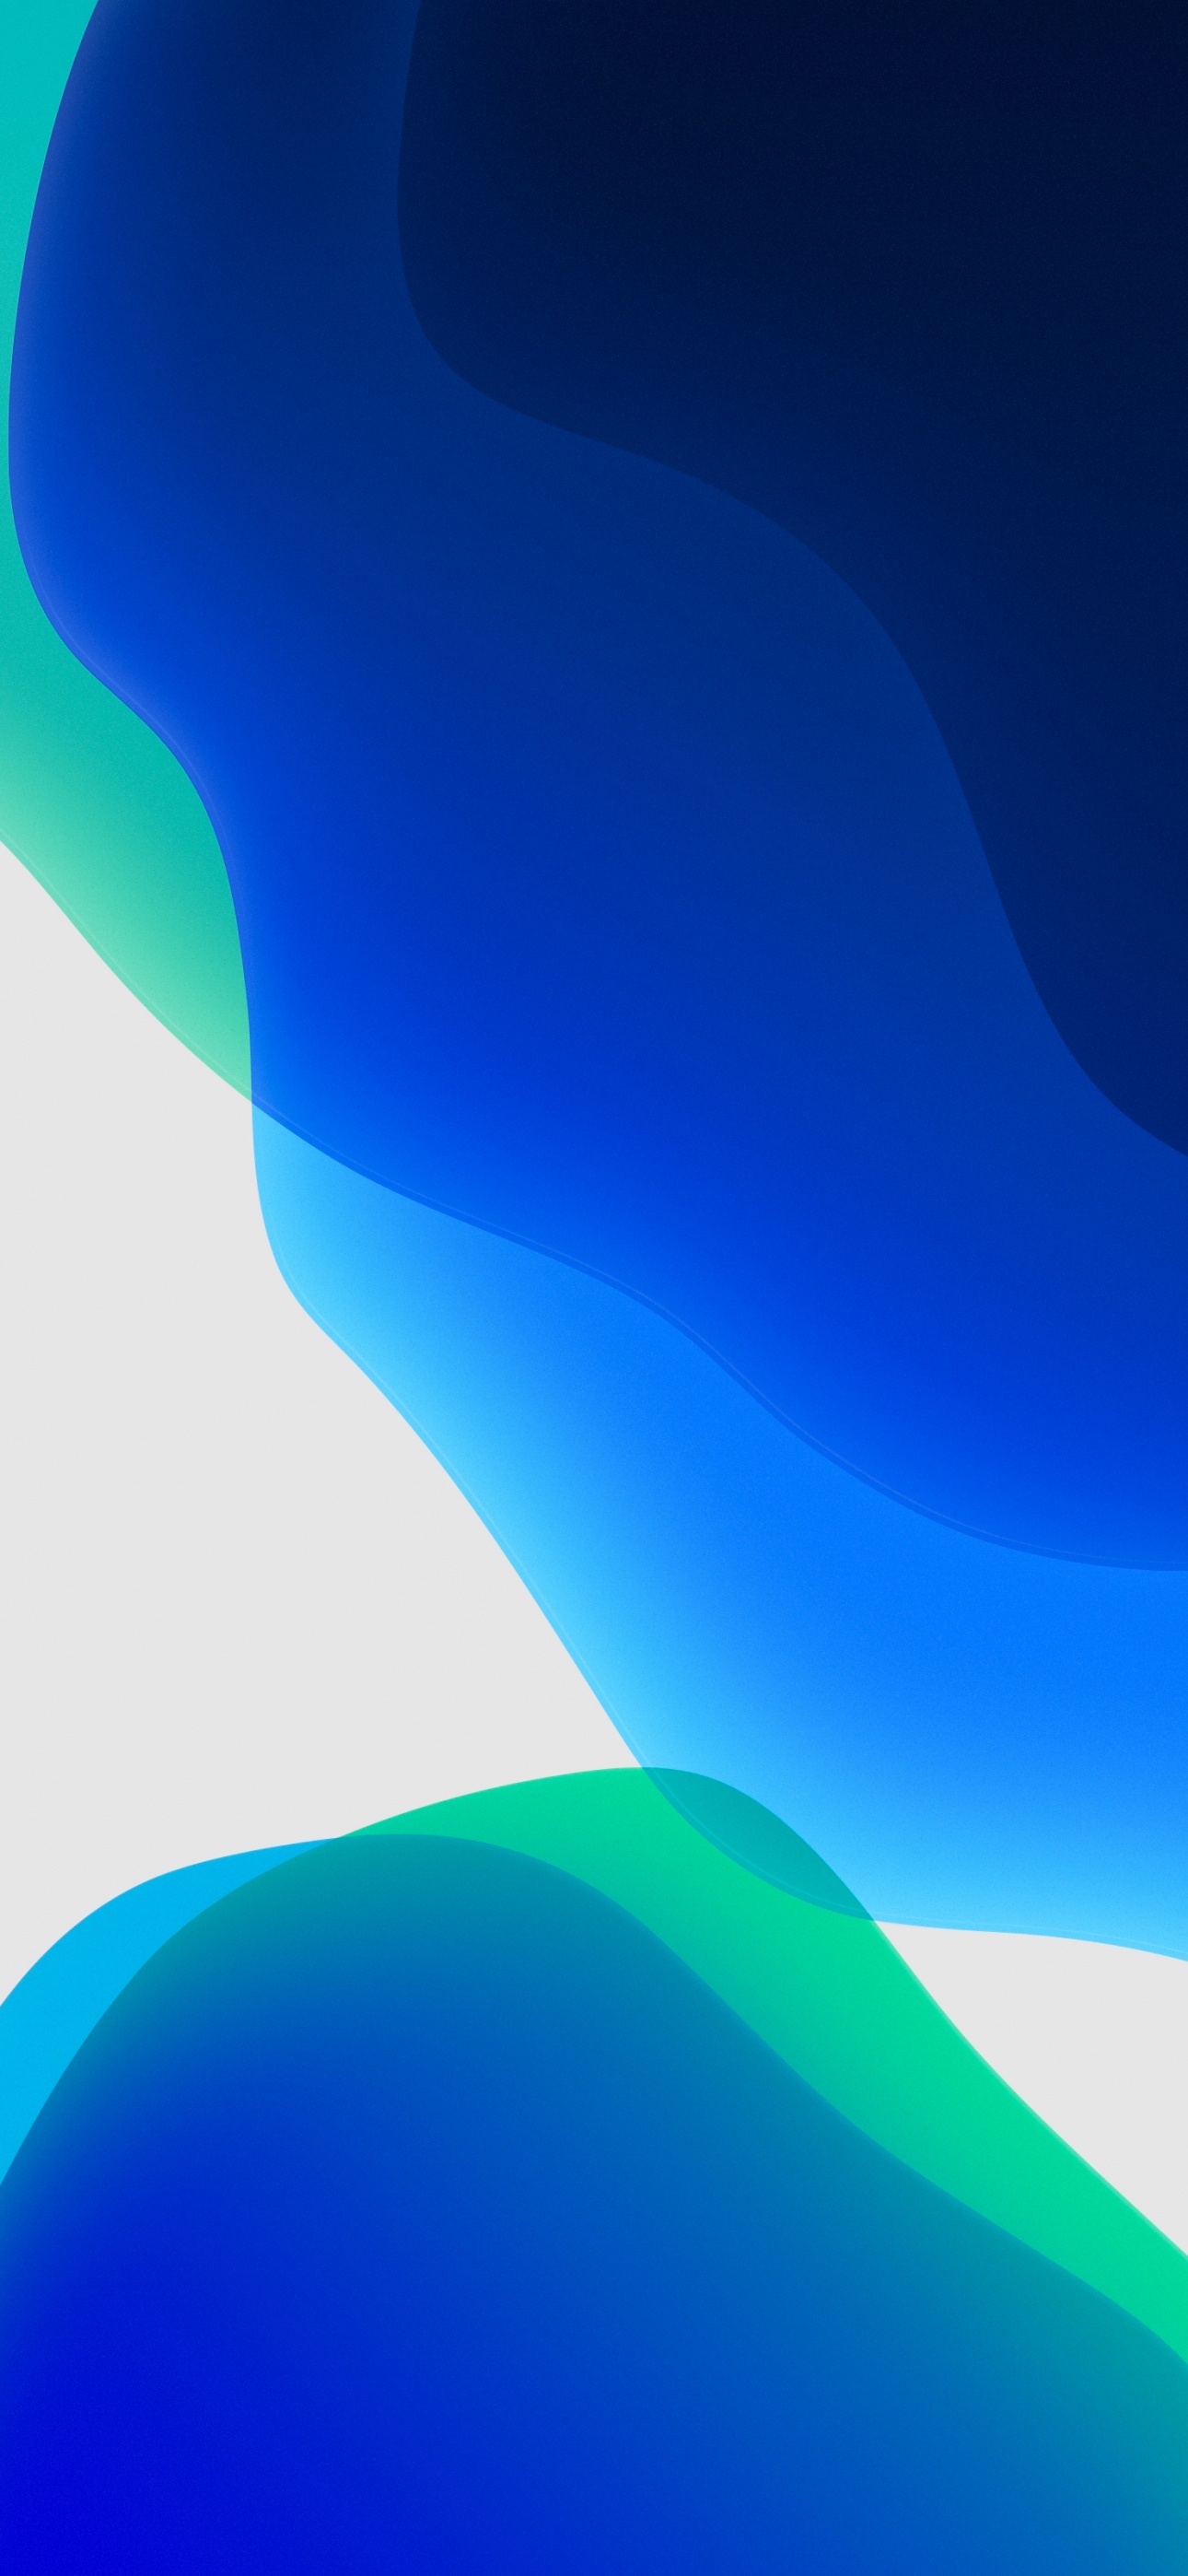 iPadOS Wallpaper 4K, Stock, Blue, Abstract